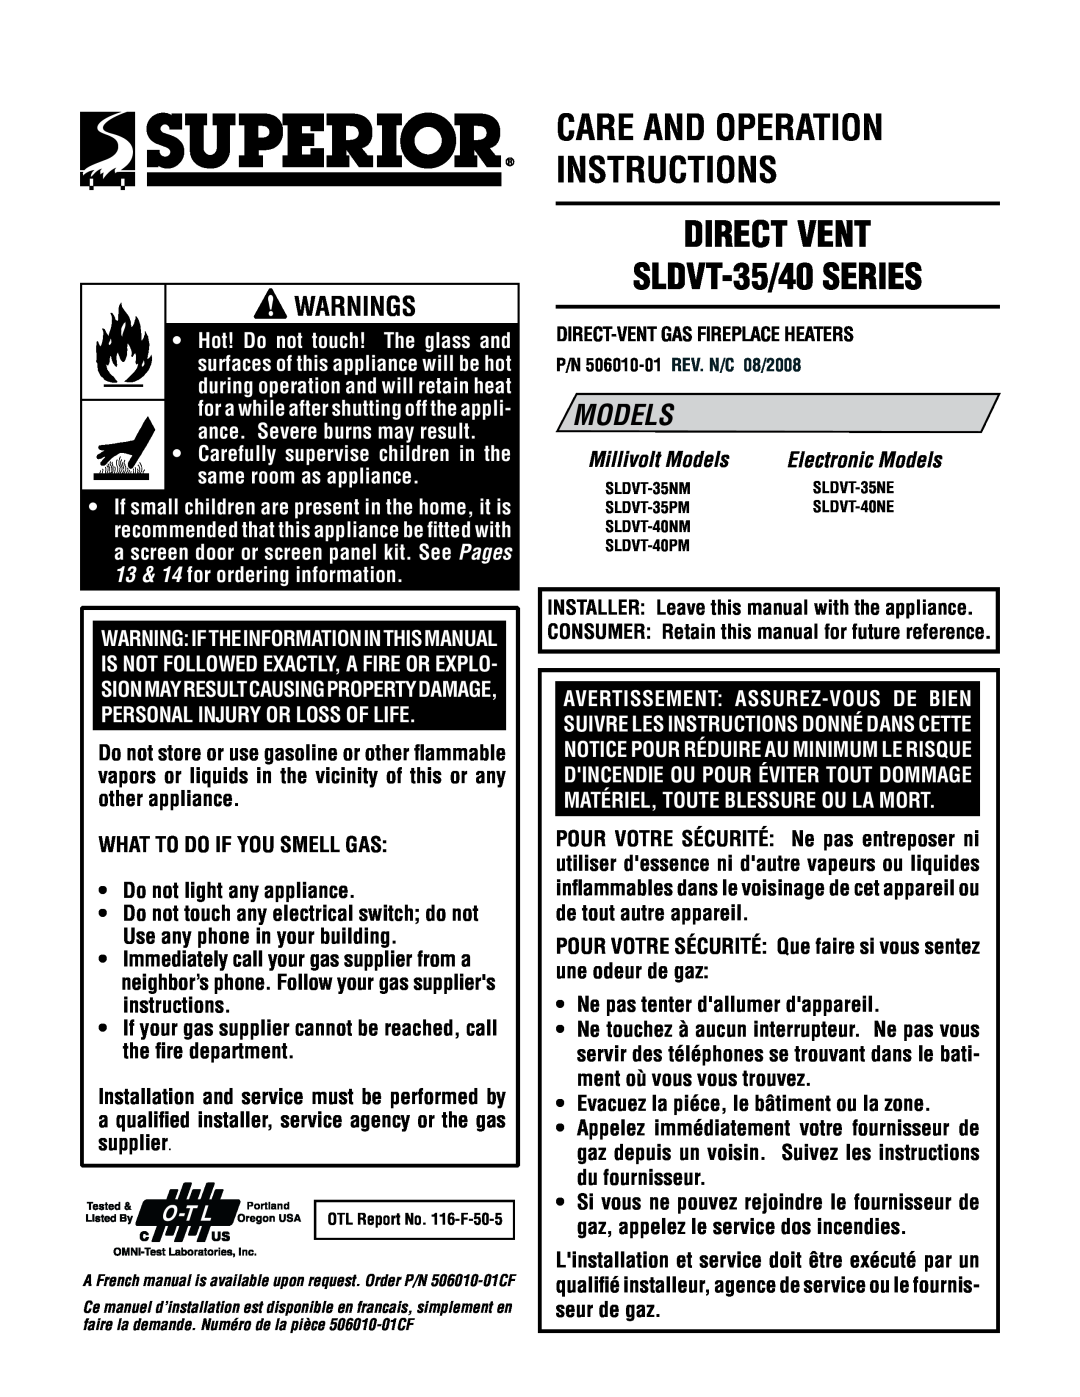 TOA Electronics SLDVT-40 manual care and operation instructions DIRECT VENT, SLDVT-35/40SERIES, Models, Warnings 